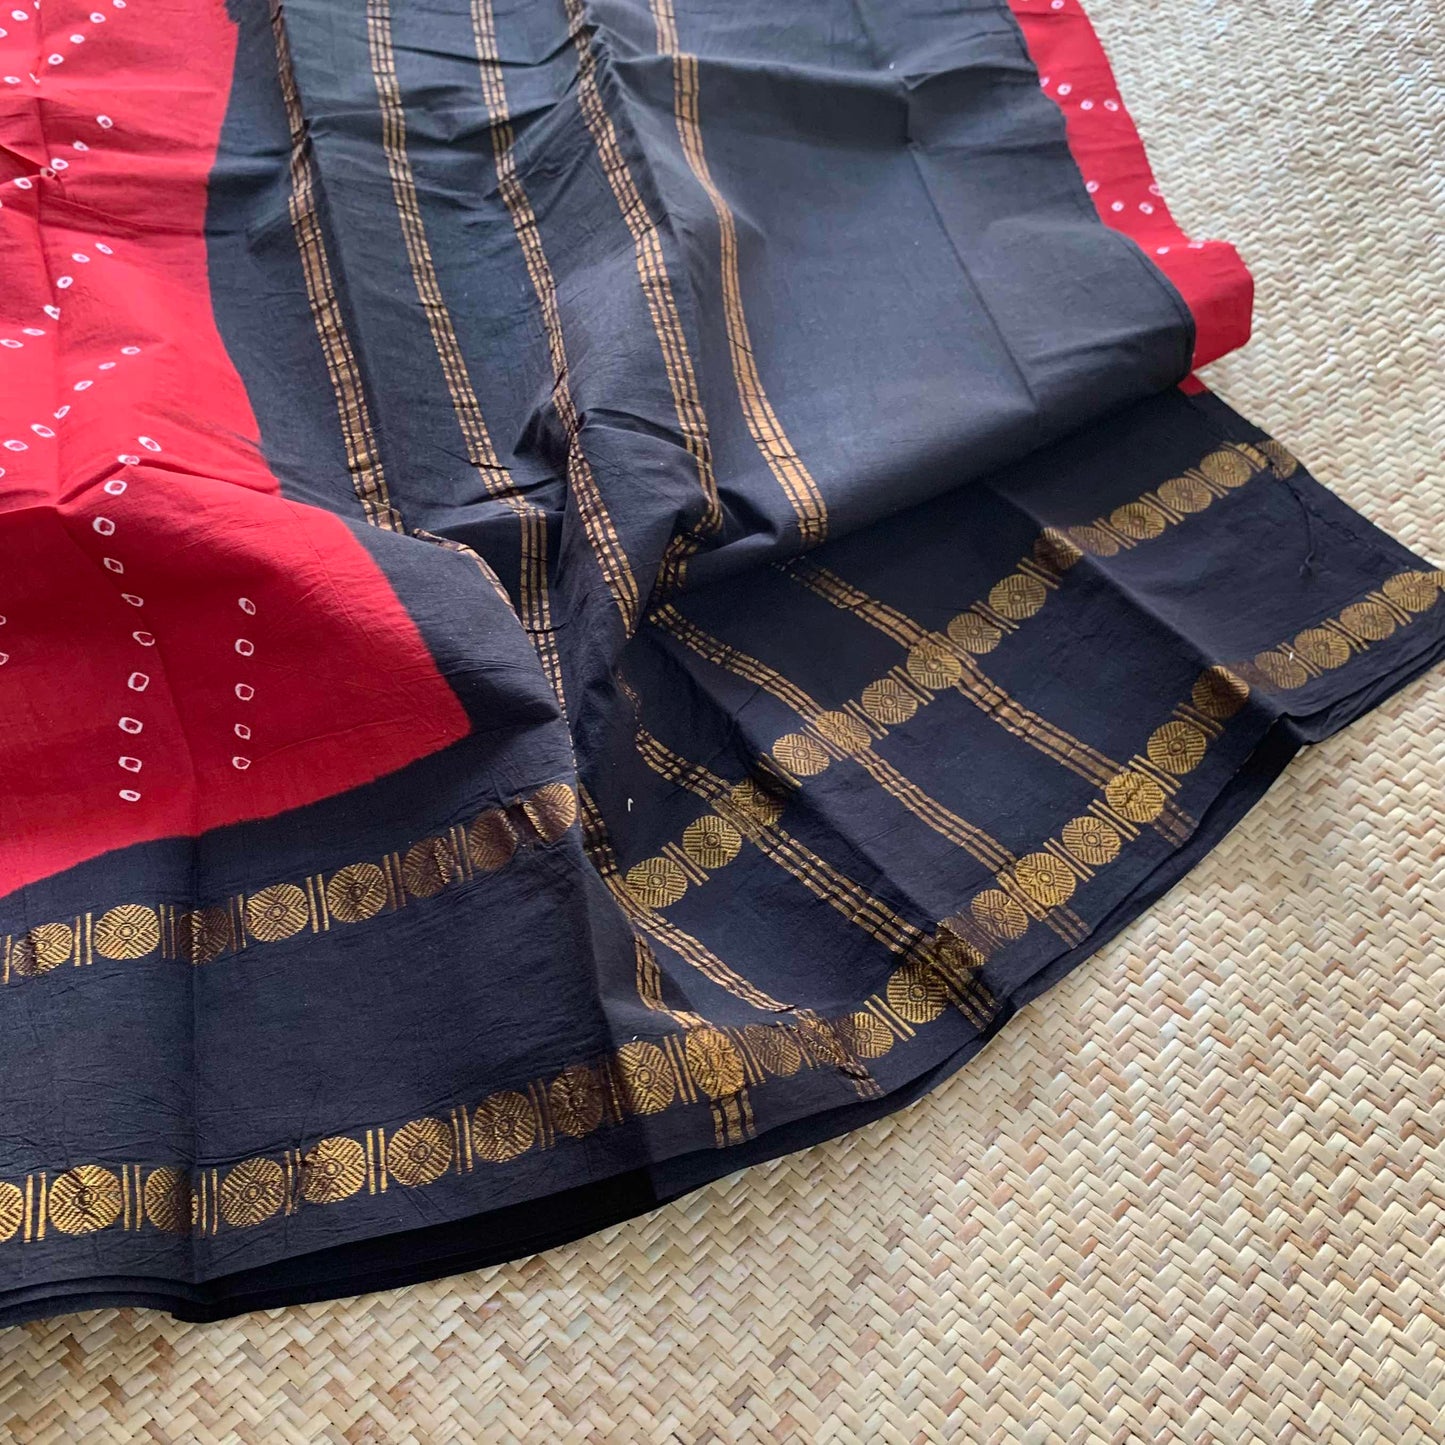 Red Saree With Black Border, Hand knotted Sungudi On a Rudraksham Border Cotton saree, Kaikattu Sungadi